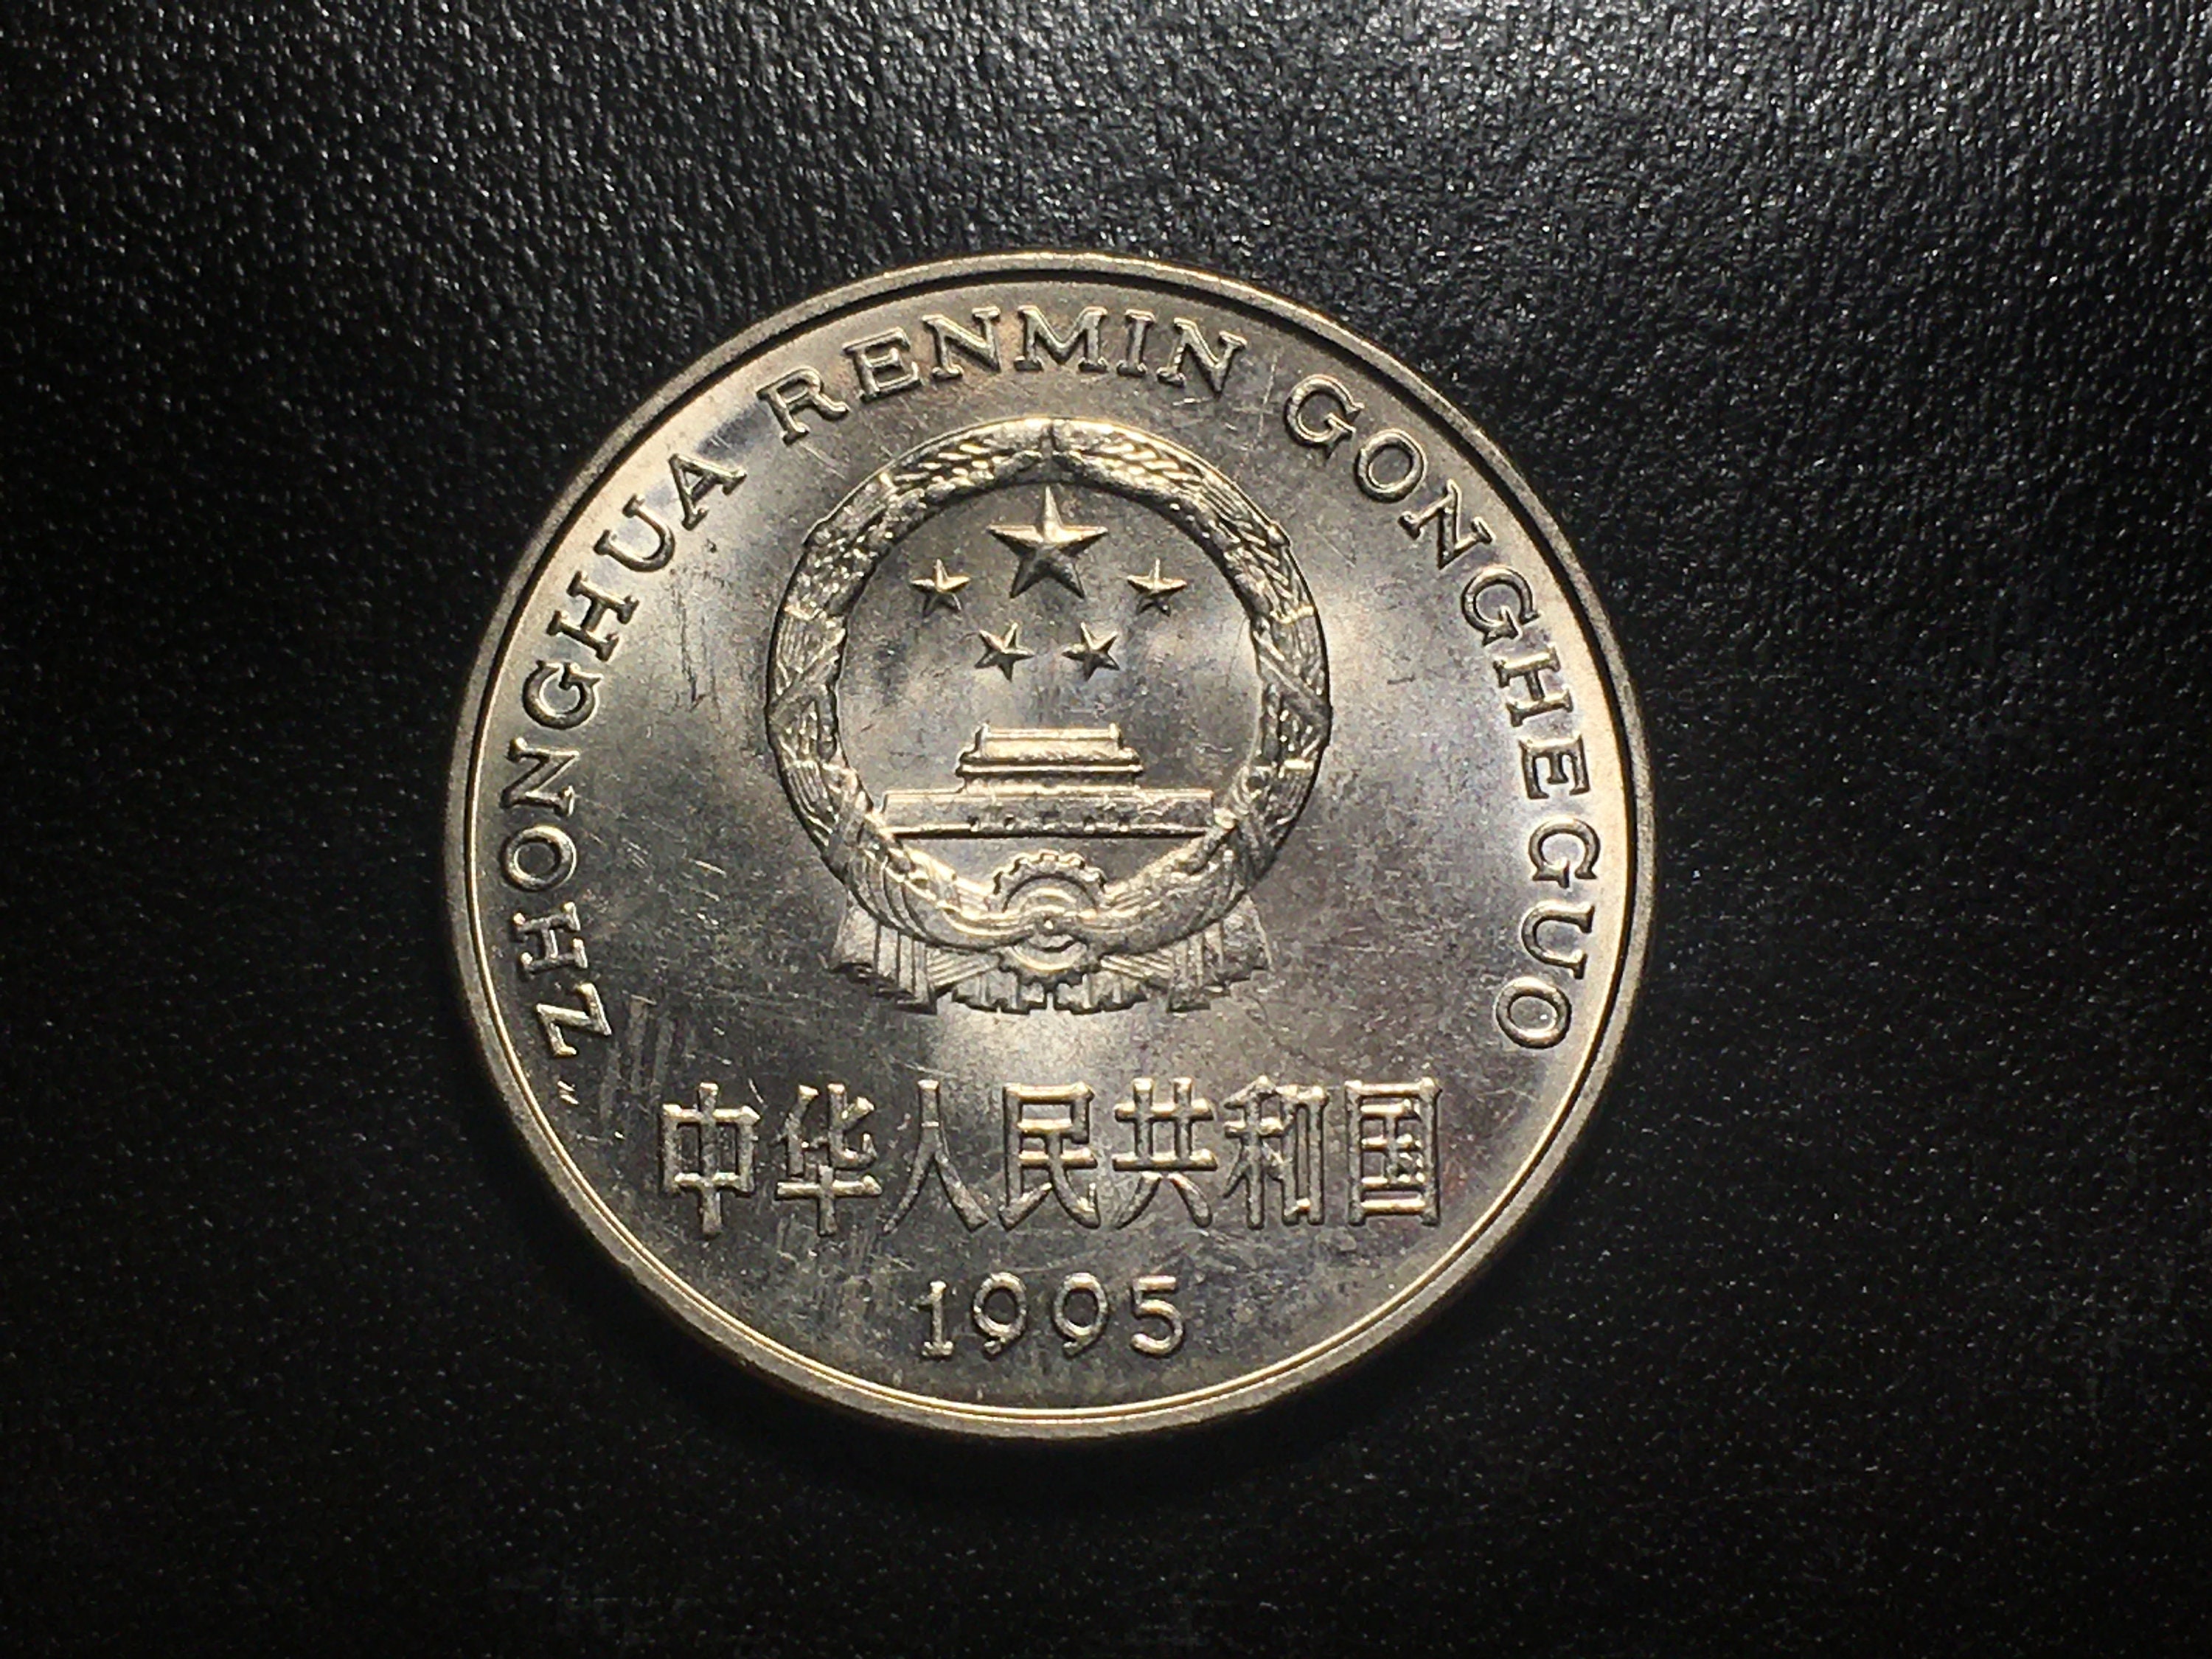 1900 British Yi Yuan Trade One Dollar Trade Coinage Brass Silver